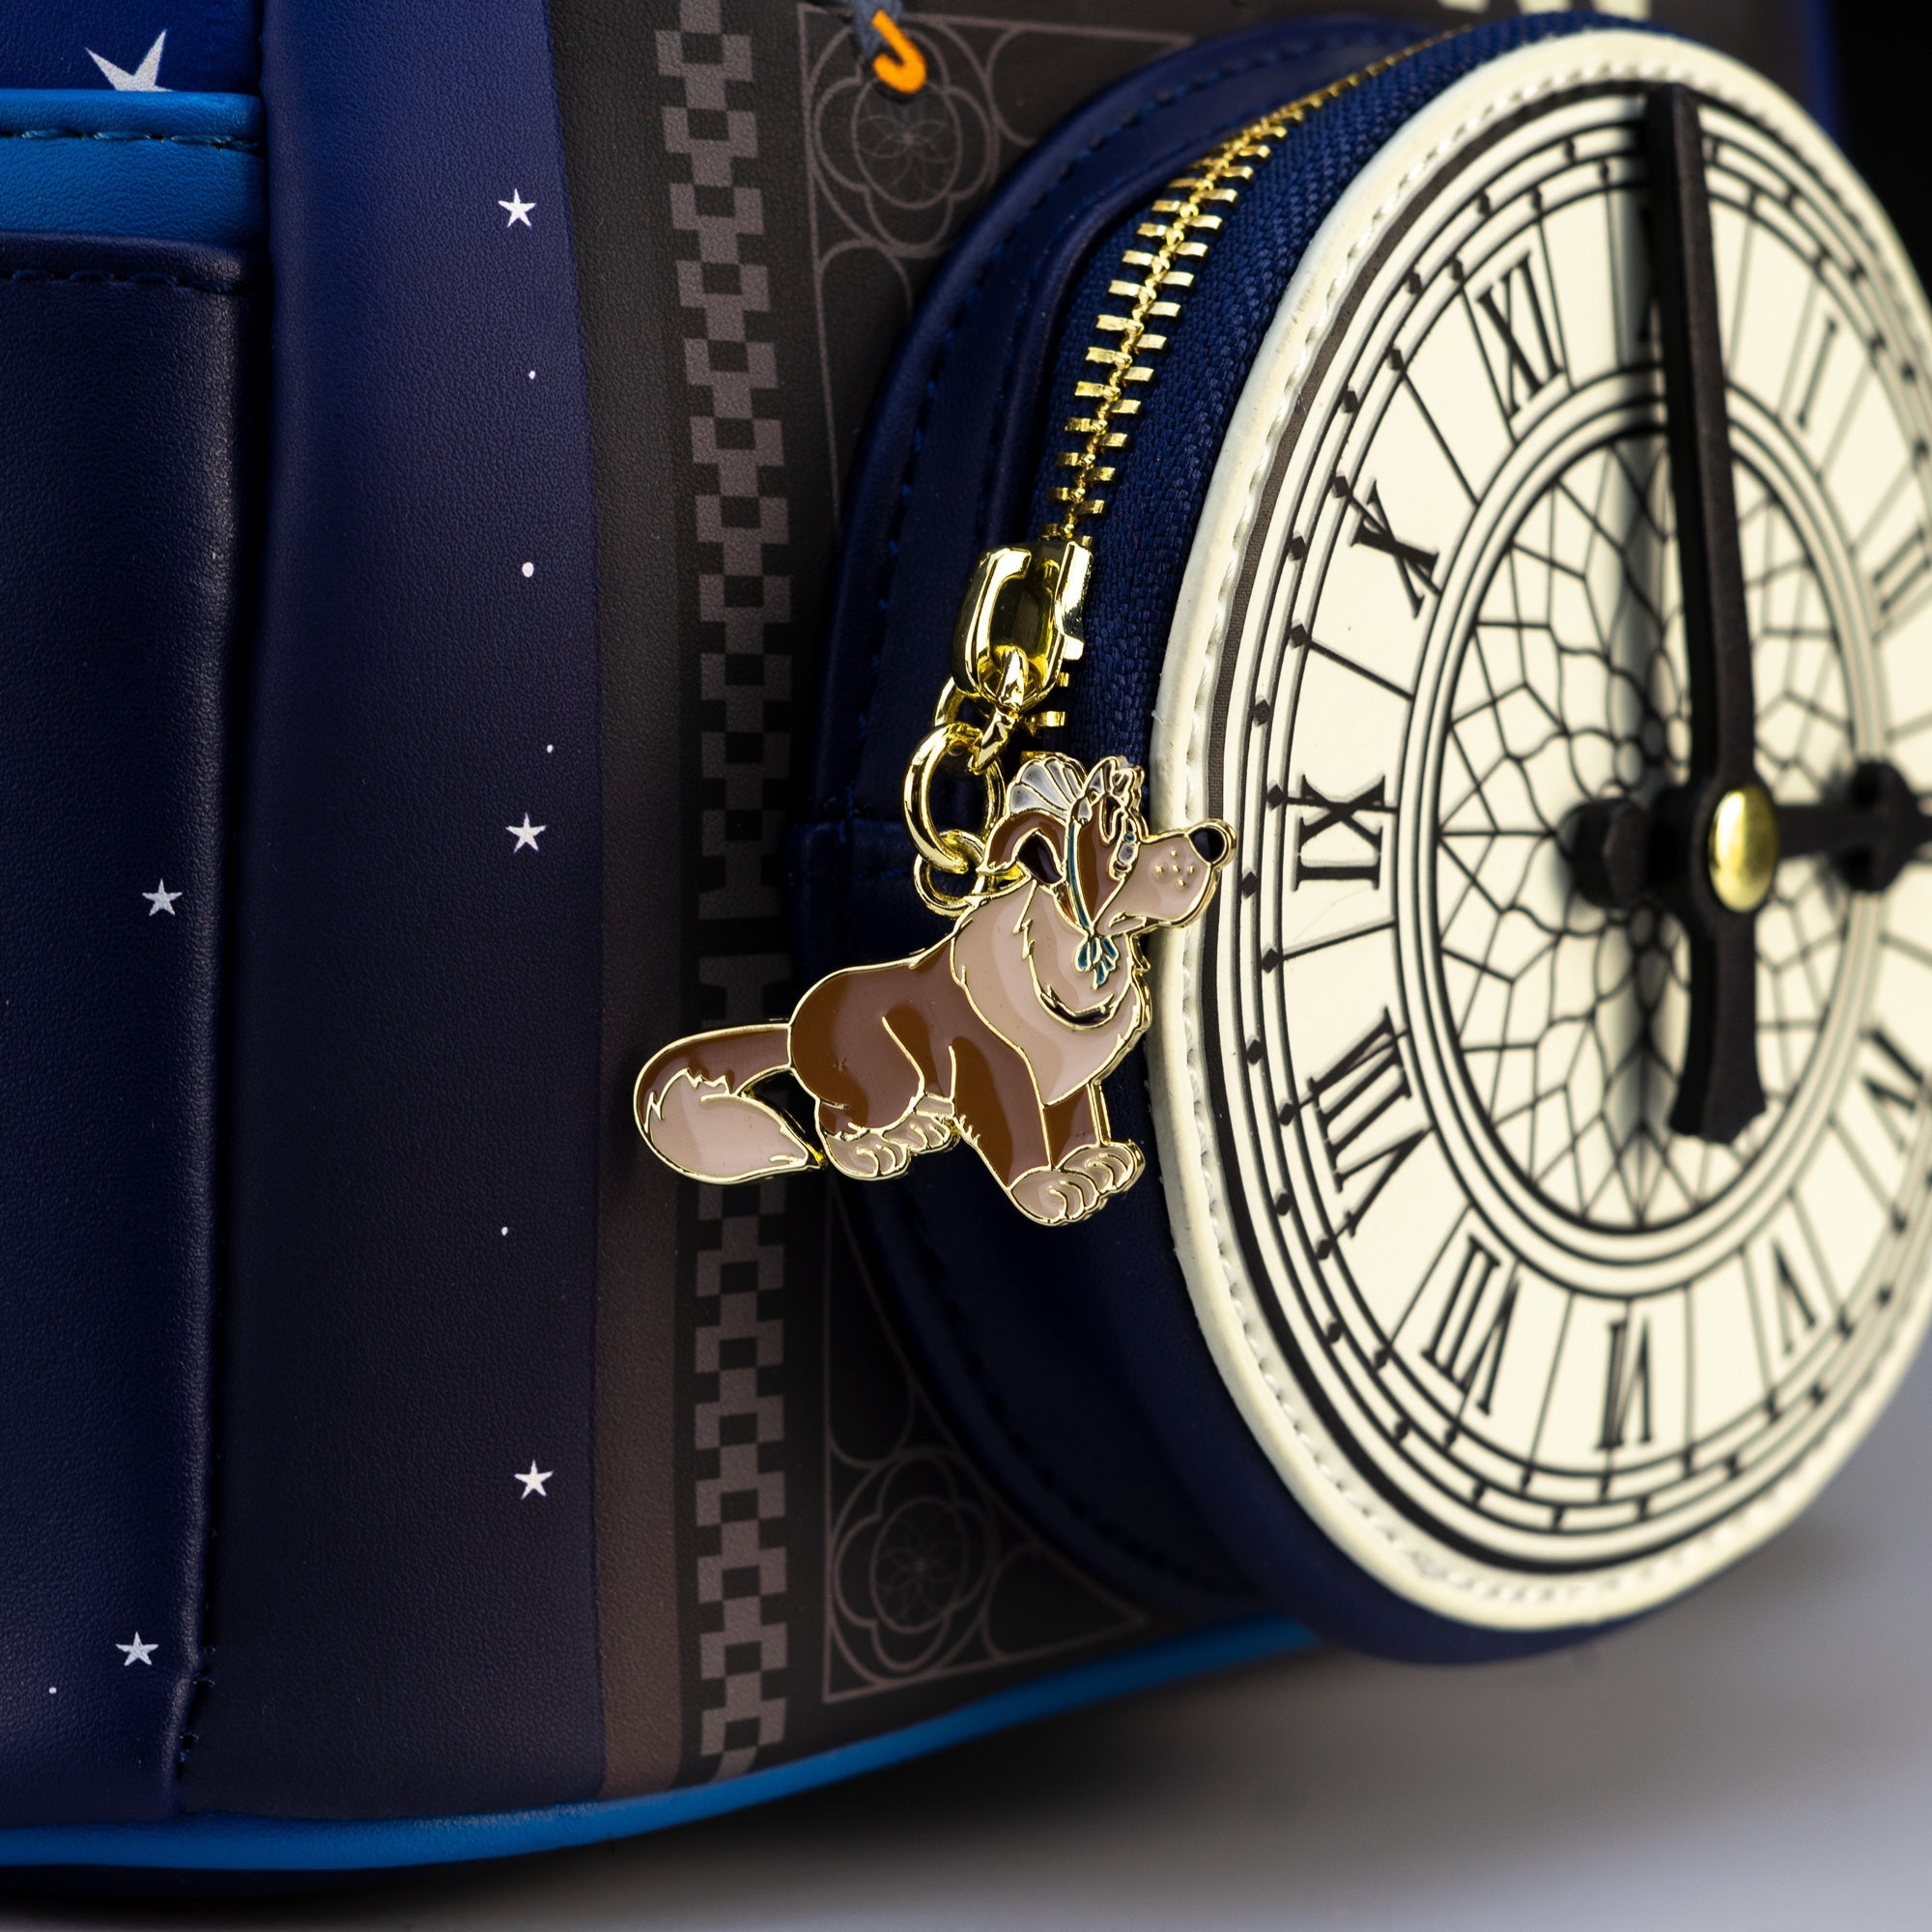 Loungefly x Disney Peter Pan Glow Clock Mini Backpack - GeekCore